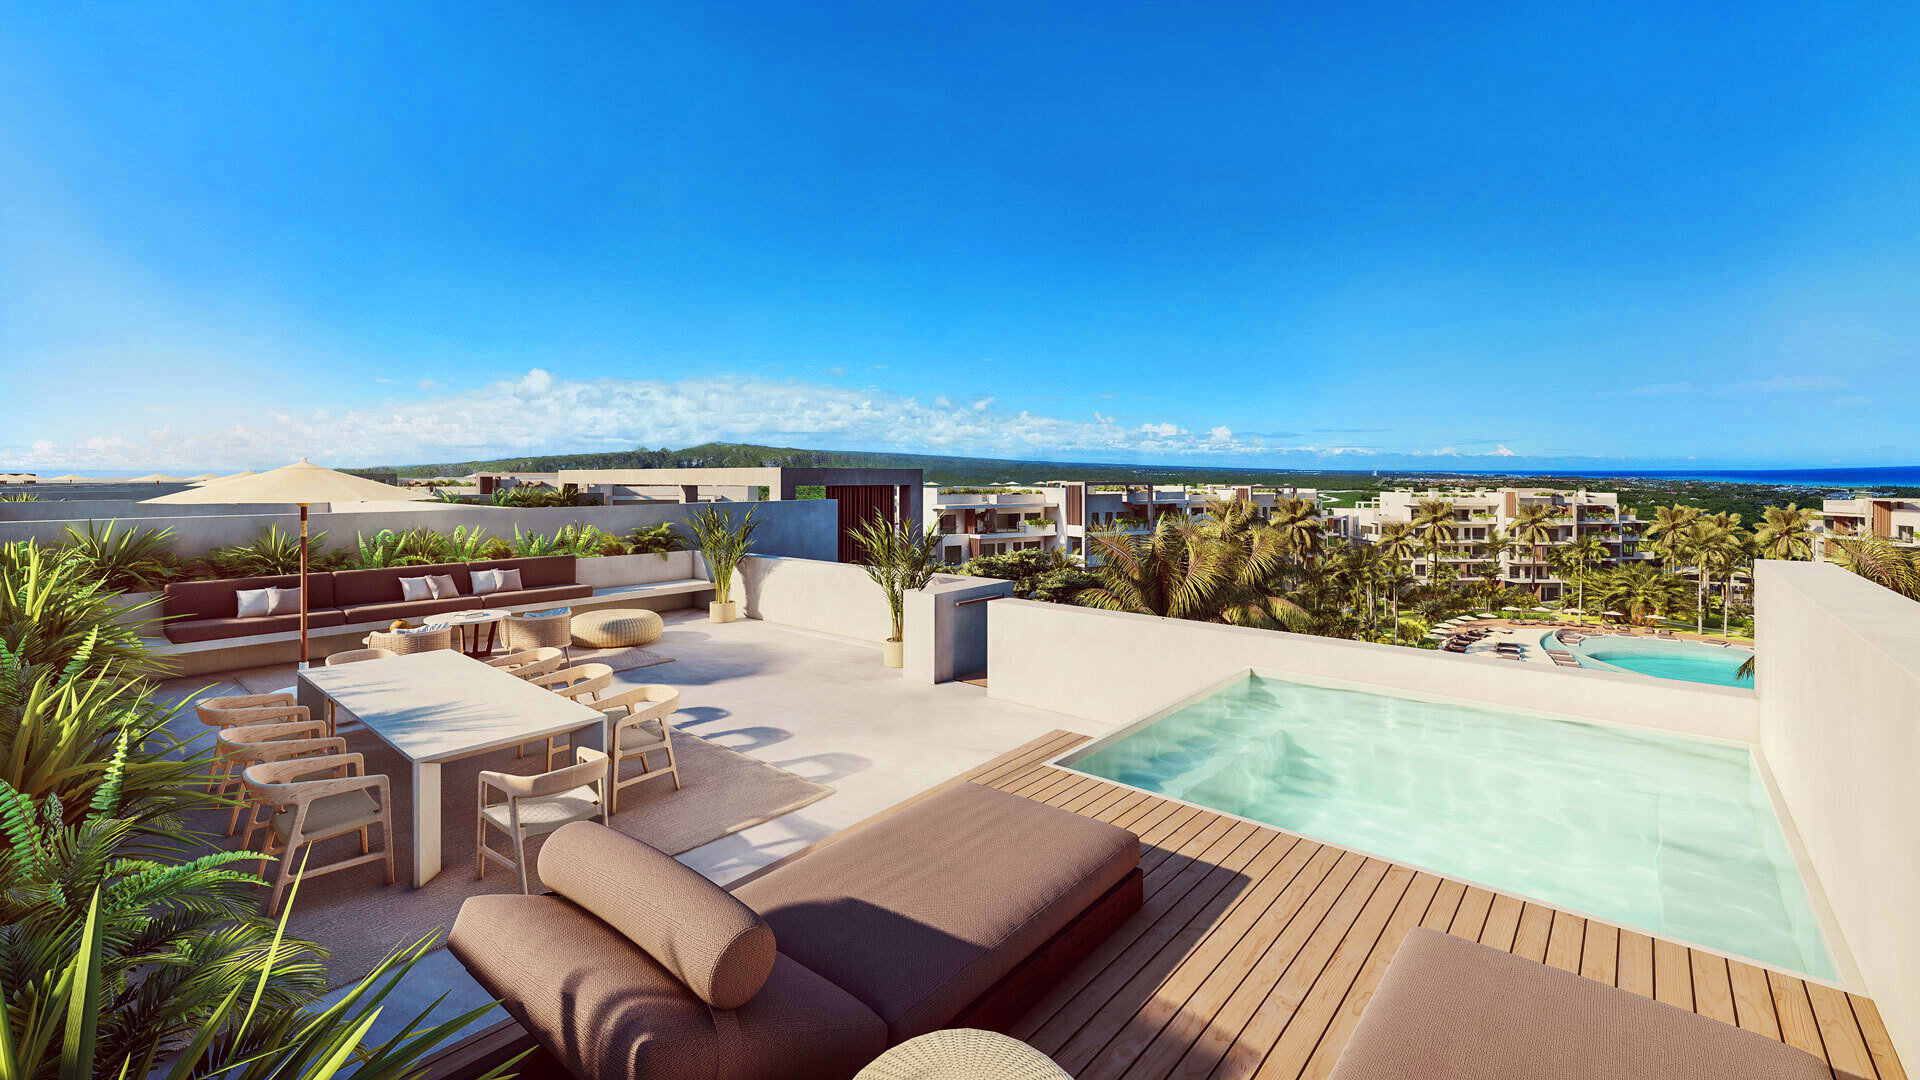 Penthouse zum Kauf Provisionsfrei 214.132 € 3 Zimmer Punta Cana